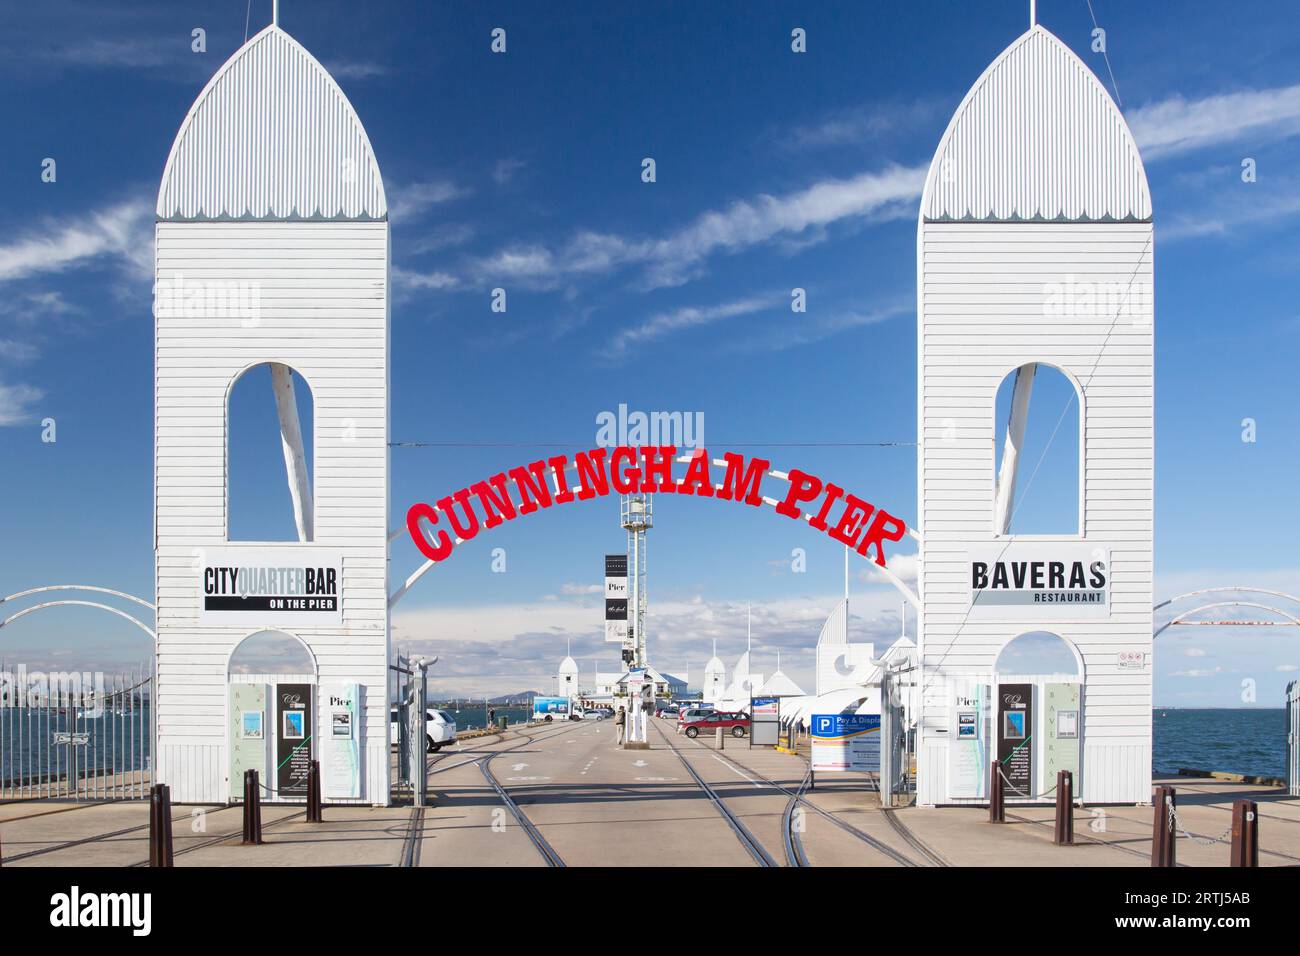 The famous landmark of Cunningham Pier in Geelong, Victoria, Australia Stock Photo